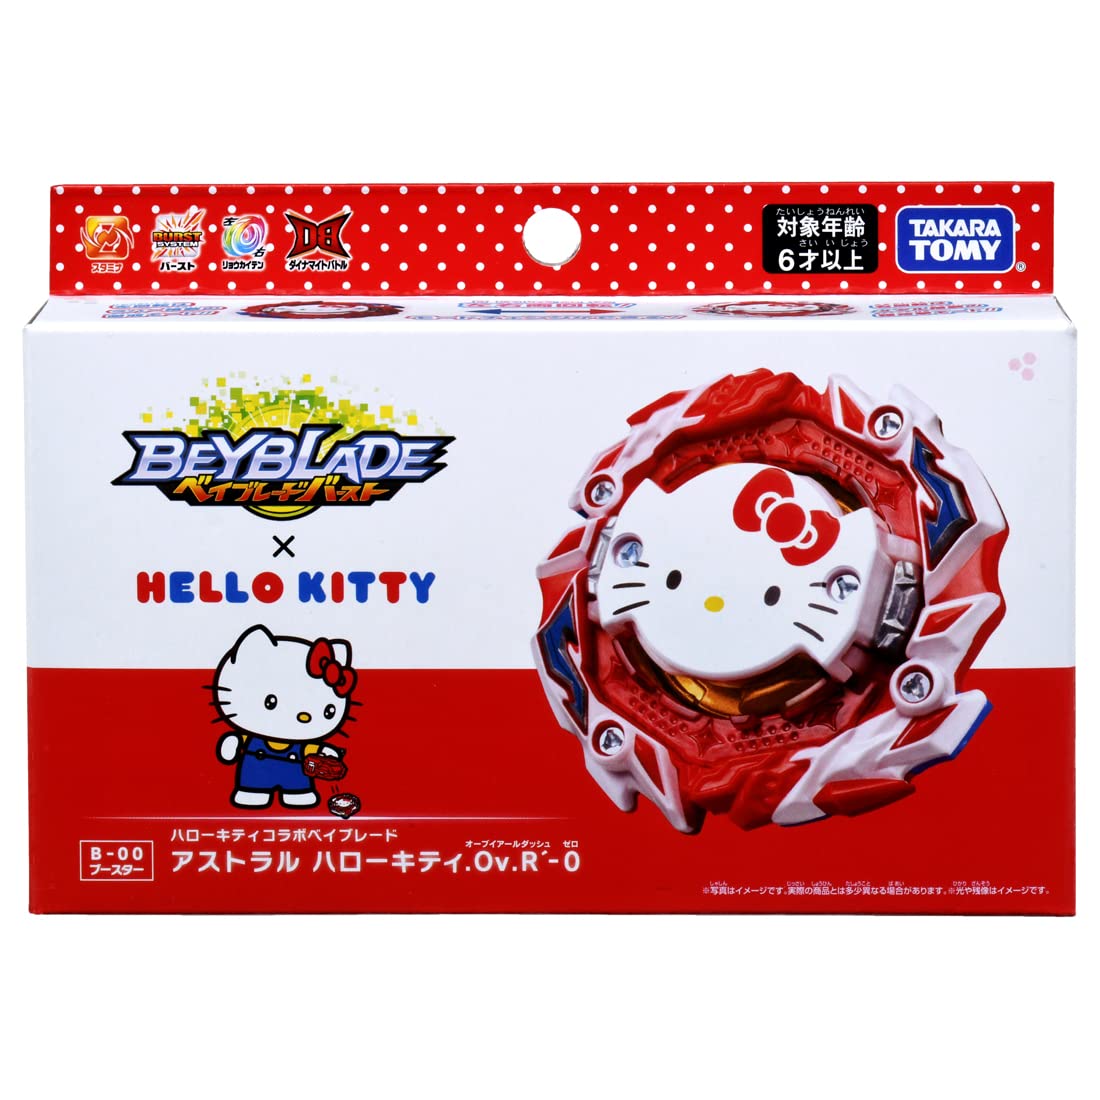 Takara Tomy Booster Astral Hello Kitty.Ov.R'-0 + Bay Random Stickers / Japan Import Shipping from Tokyo